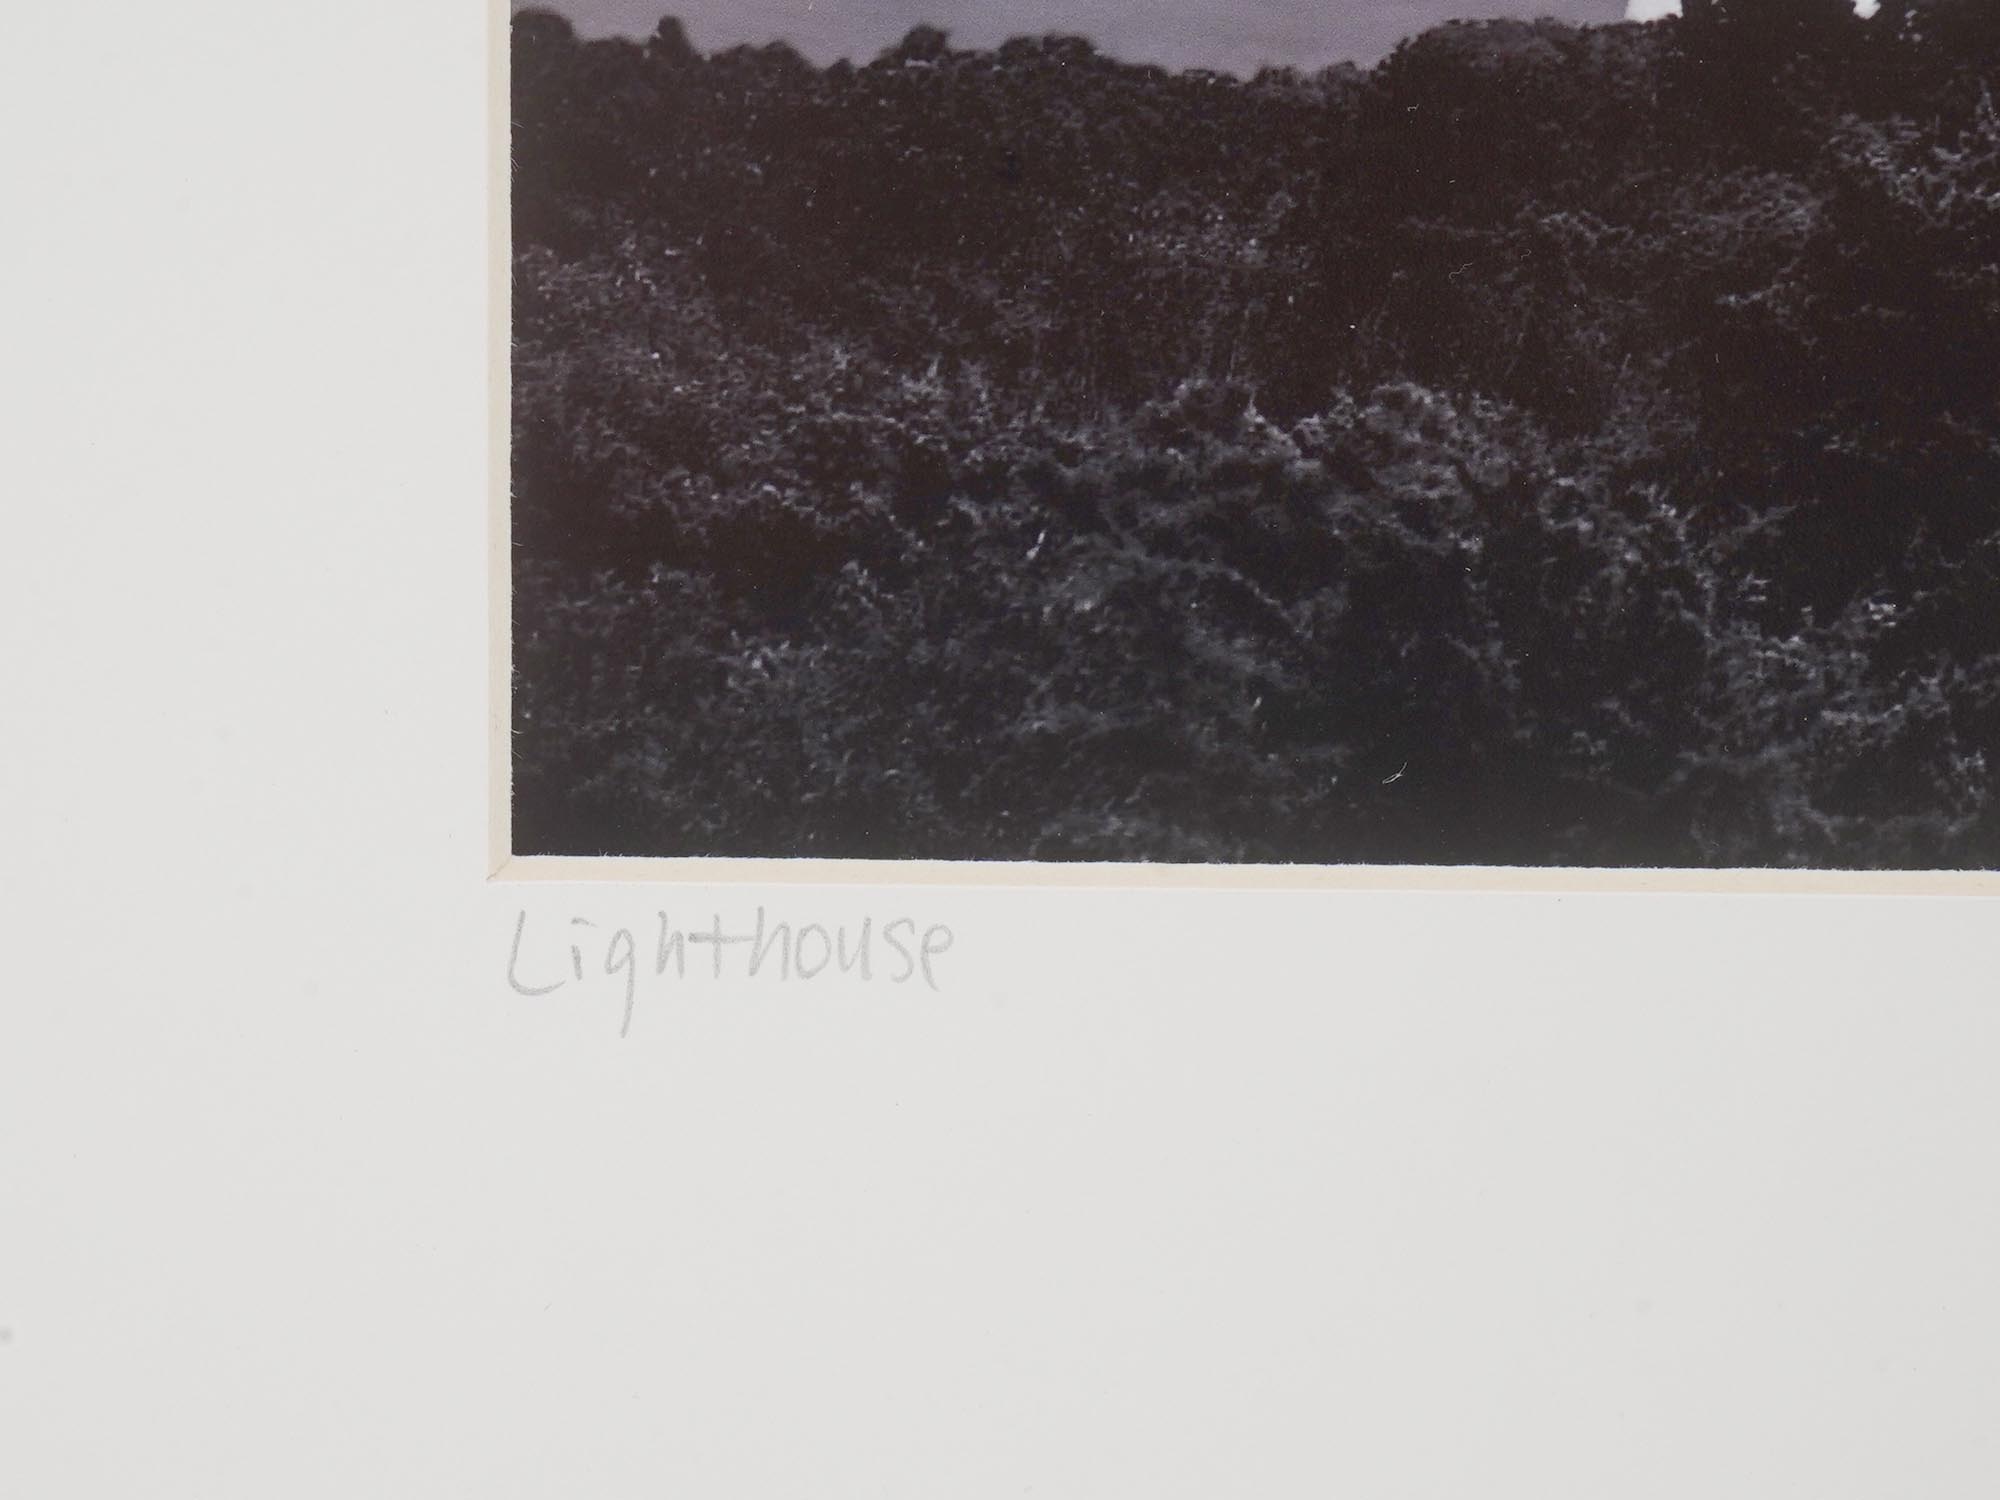 LTD LIGHTHOUSE PHOTO ART PRINT BY JOHN DENG SIGNED PIC-2